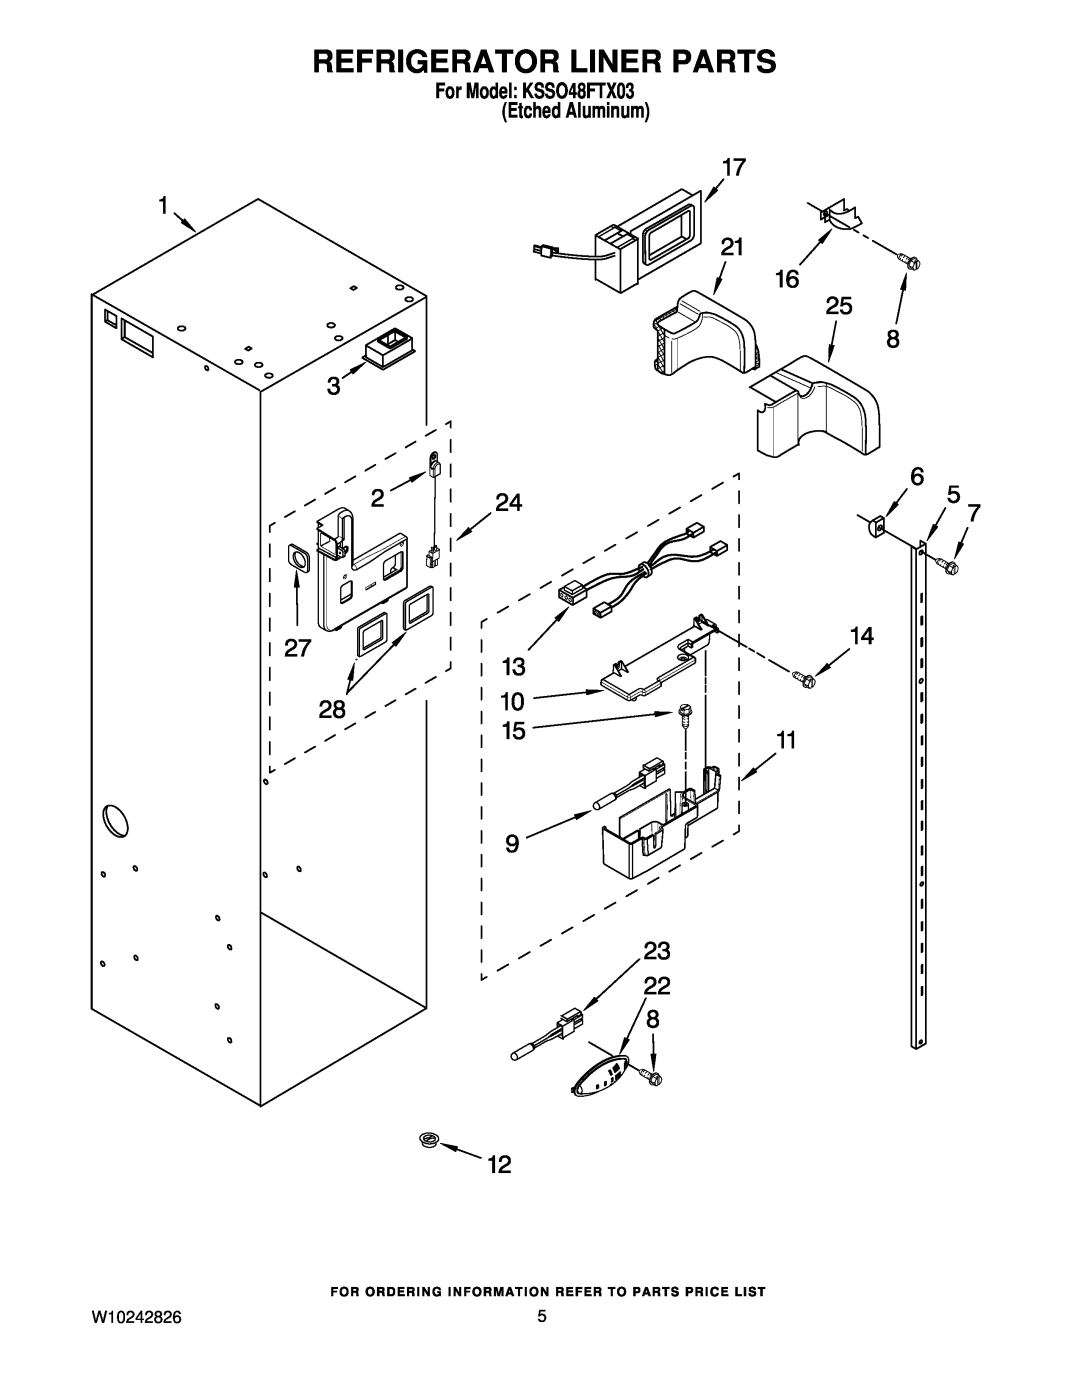 KitchenAid manual Refrigerator Liner Parts, W10242826, For Model KSSO48FTX03 Etched Aluminum 